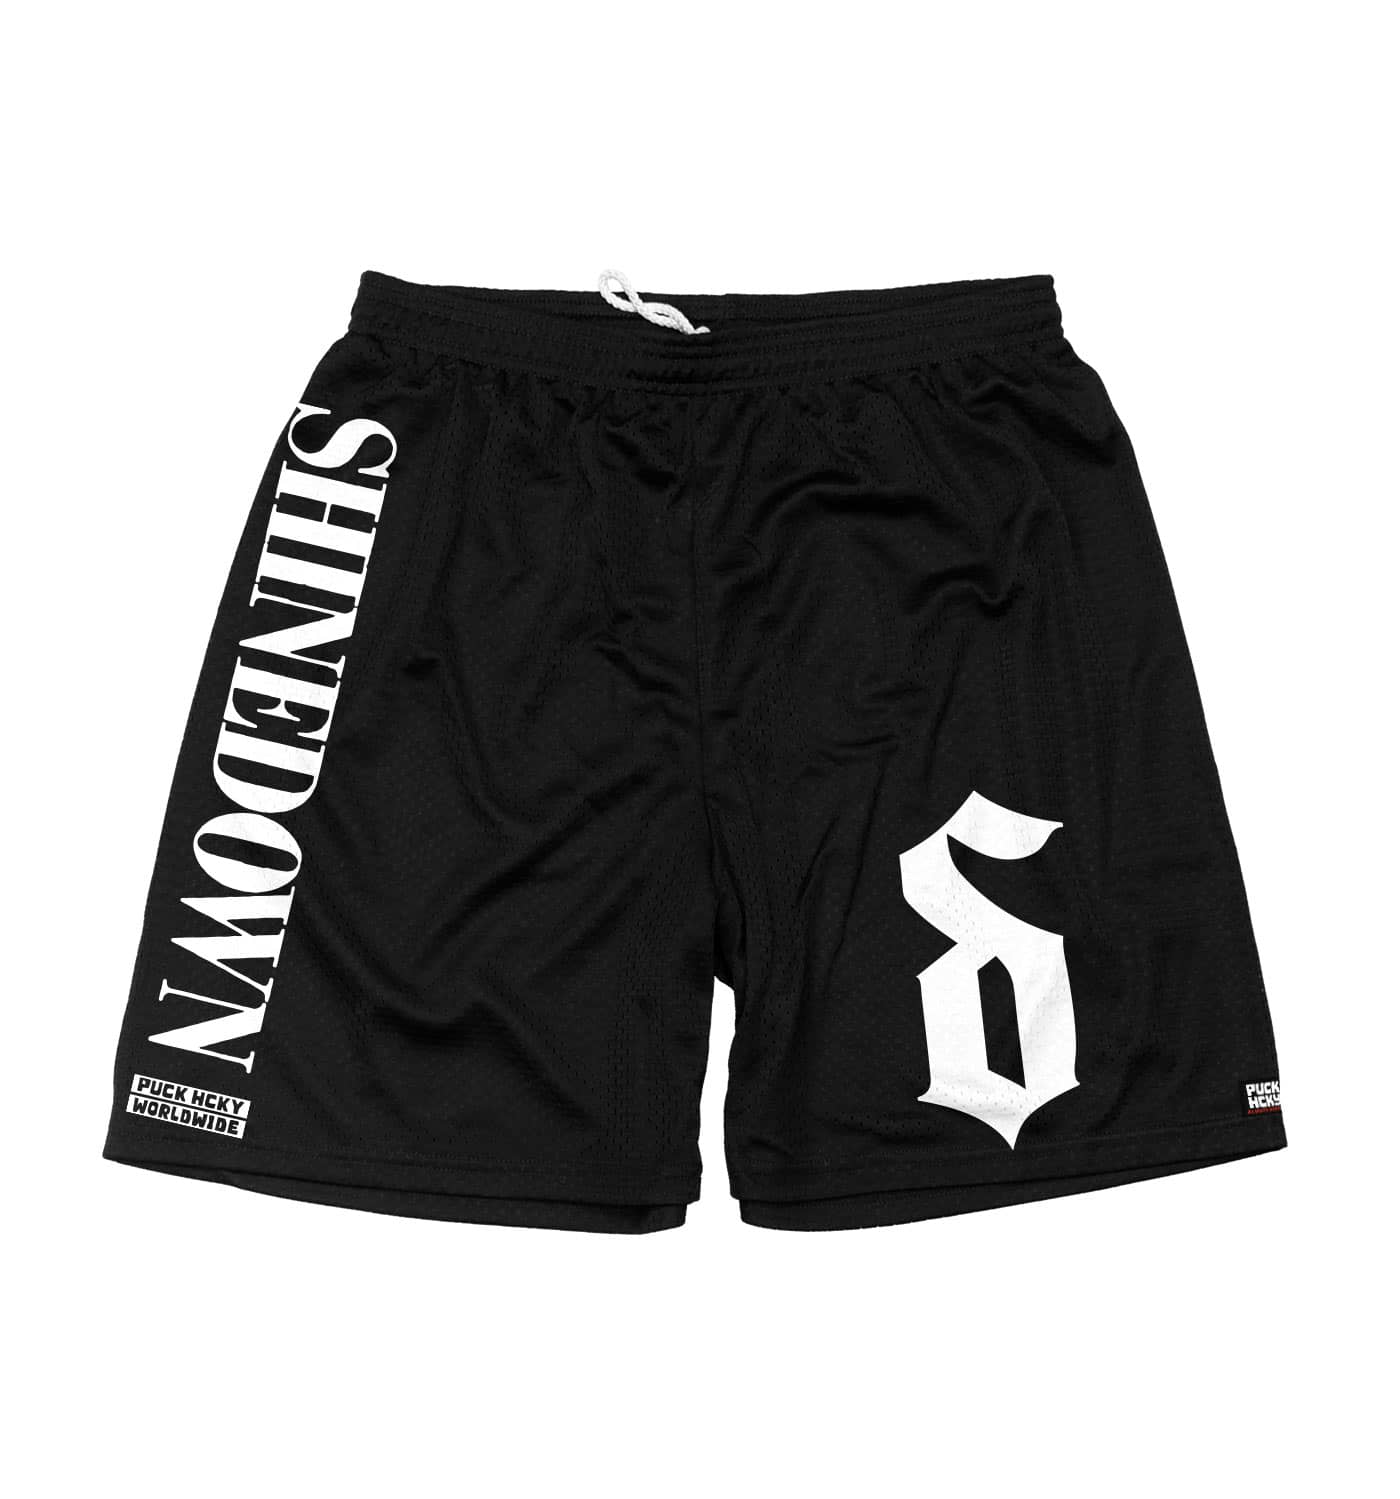 SHINEDOWN ‘ADRENALINE’ mesh hockey shorts in black front view